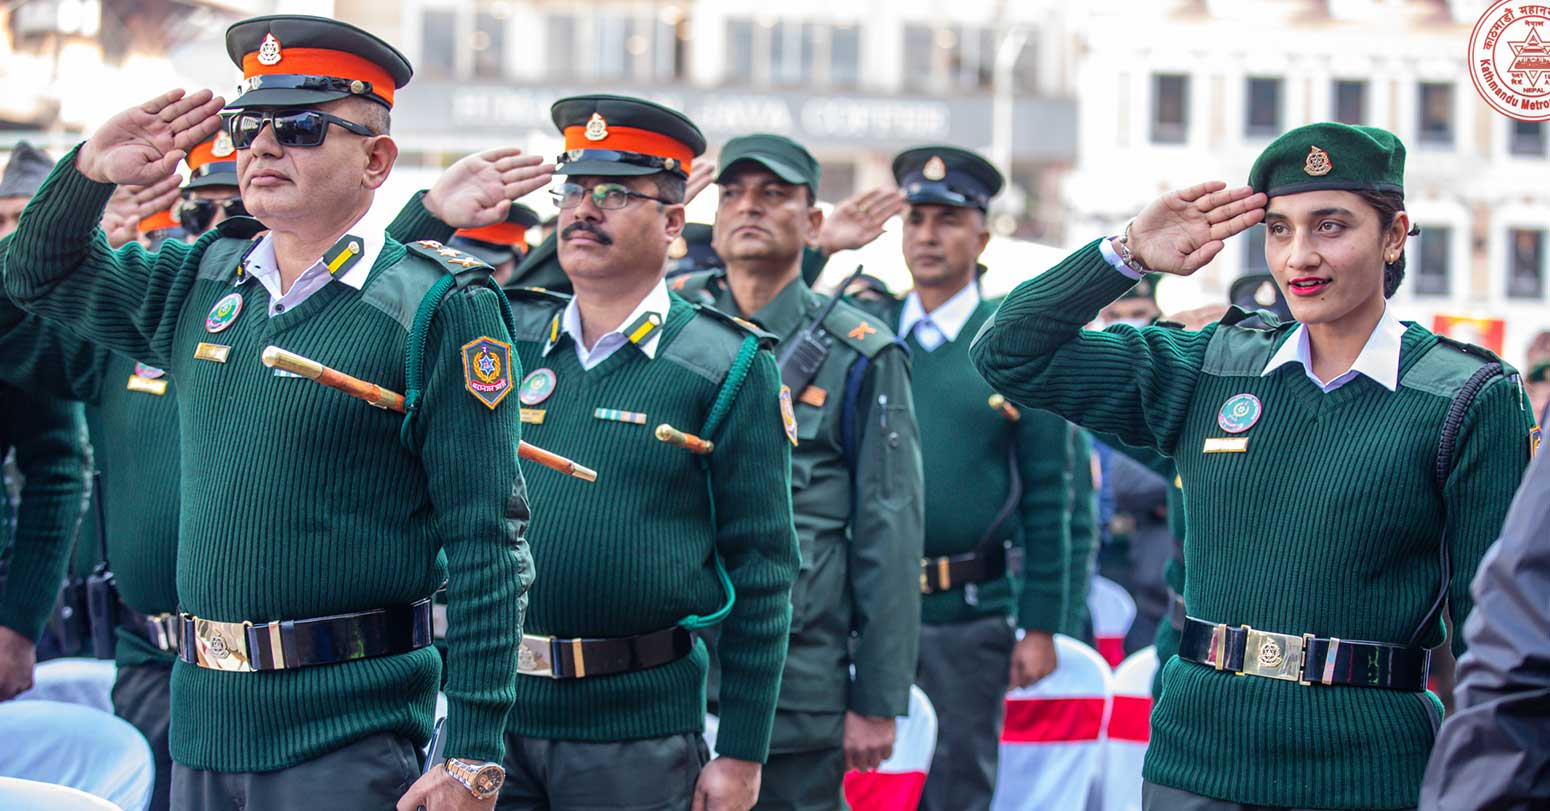 KCM to recruit Nepal Army alternates as city police (information inside)